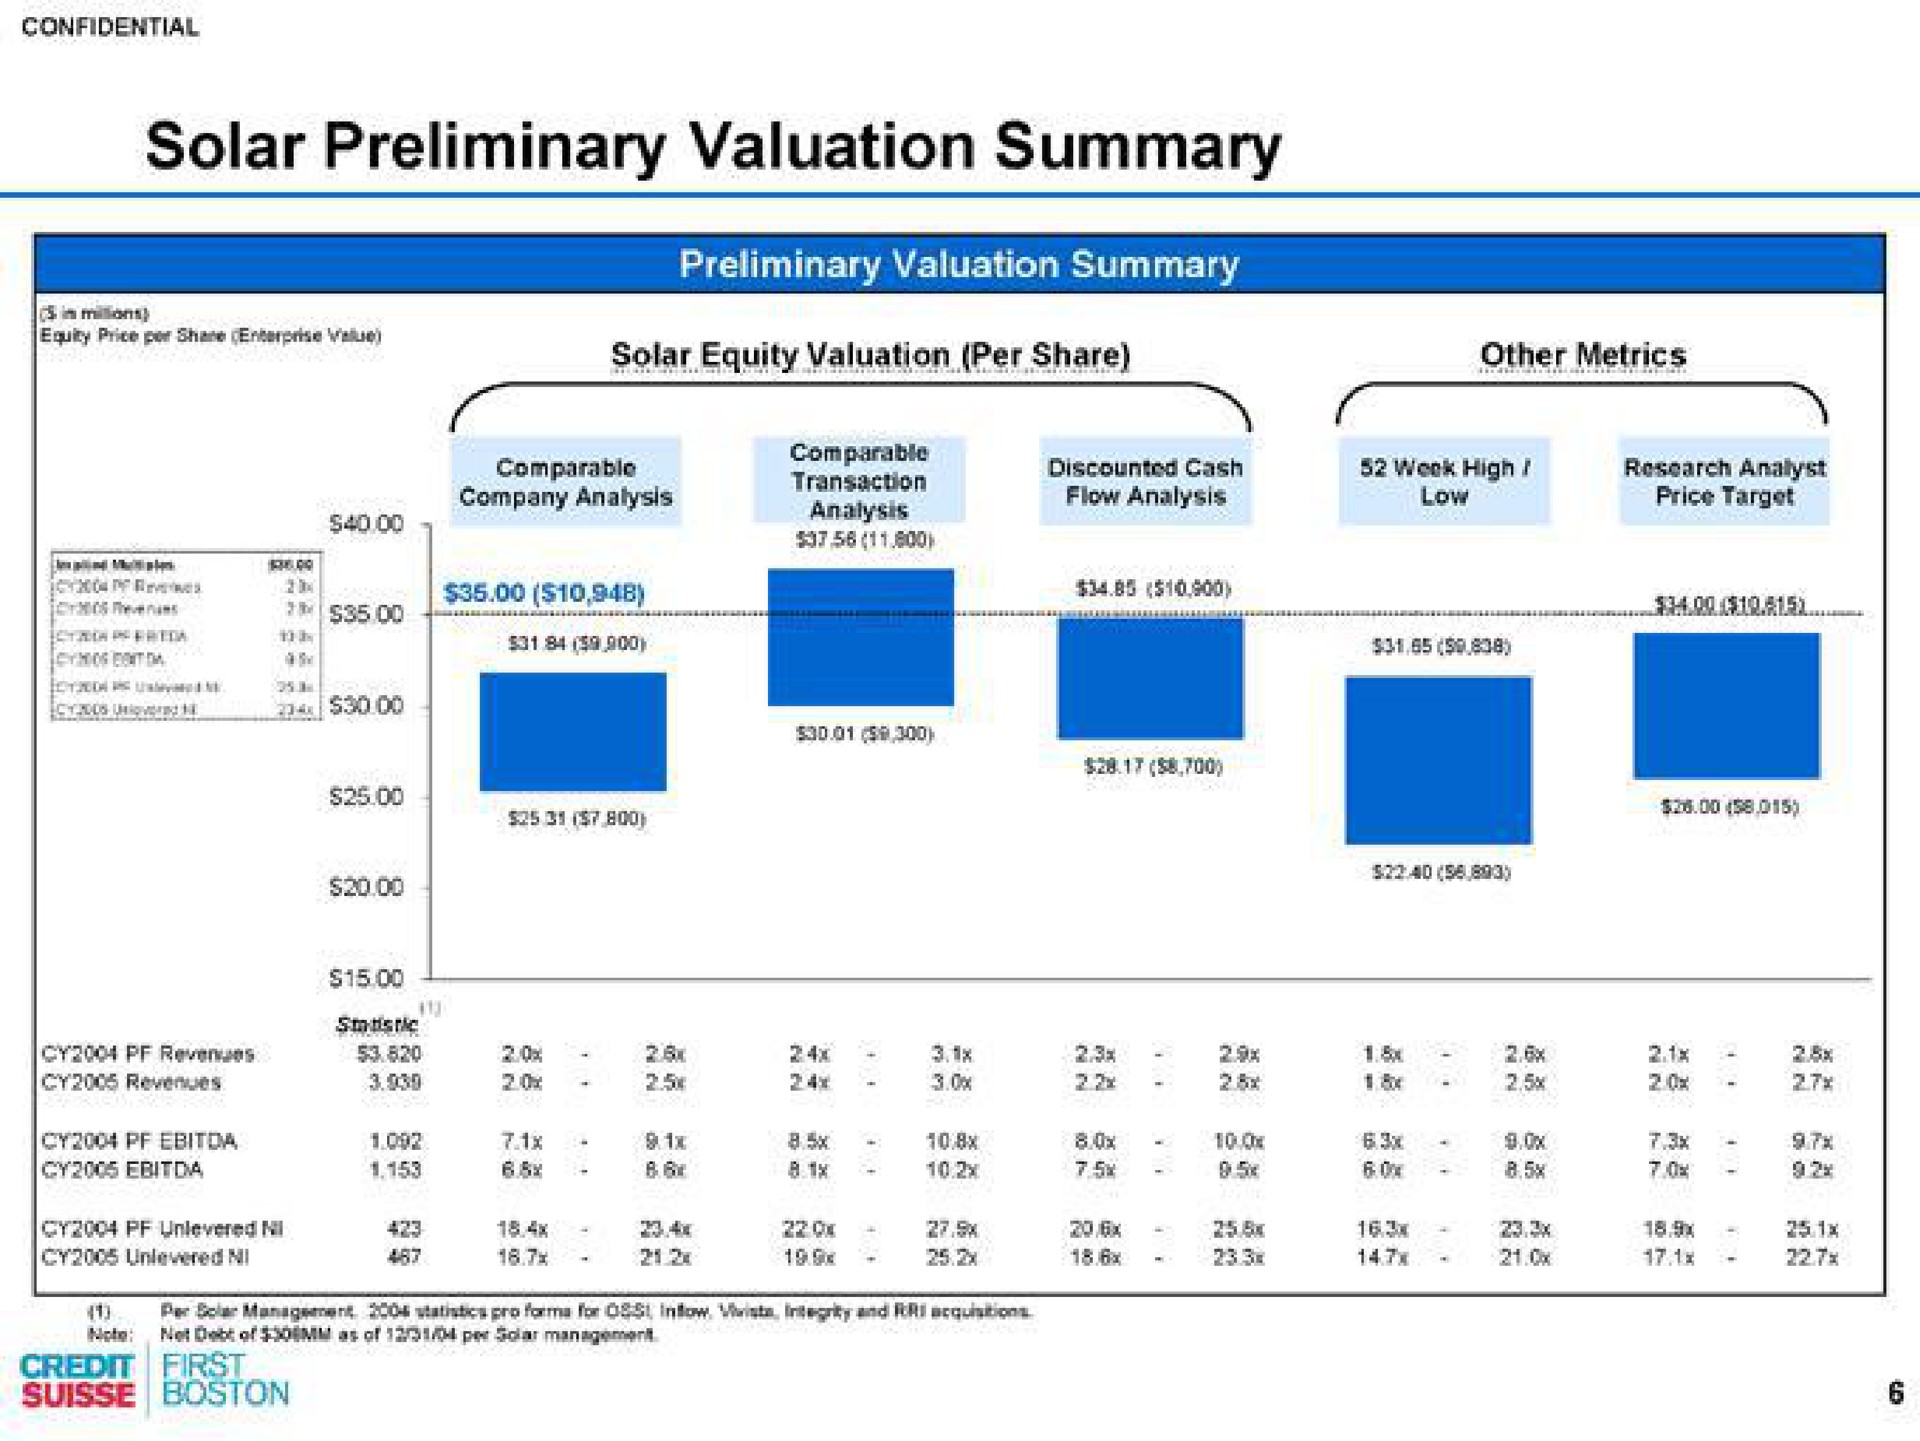 solar preliminary valuation summary | Credit Suisse